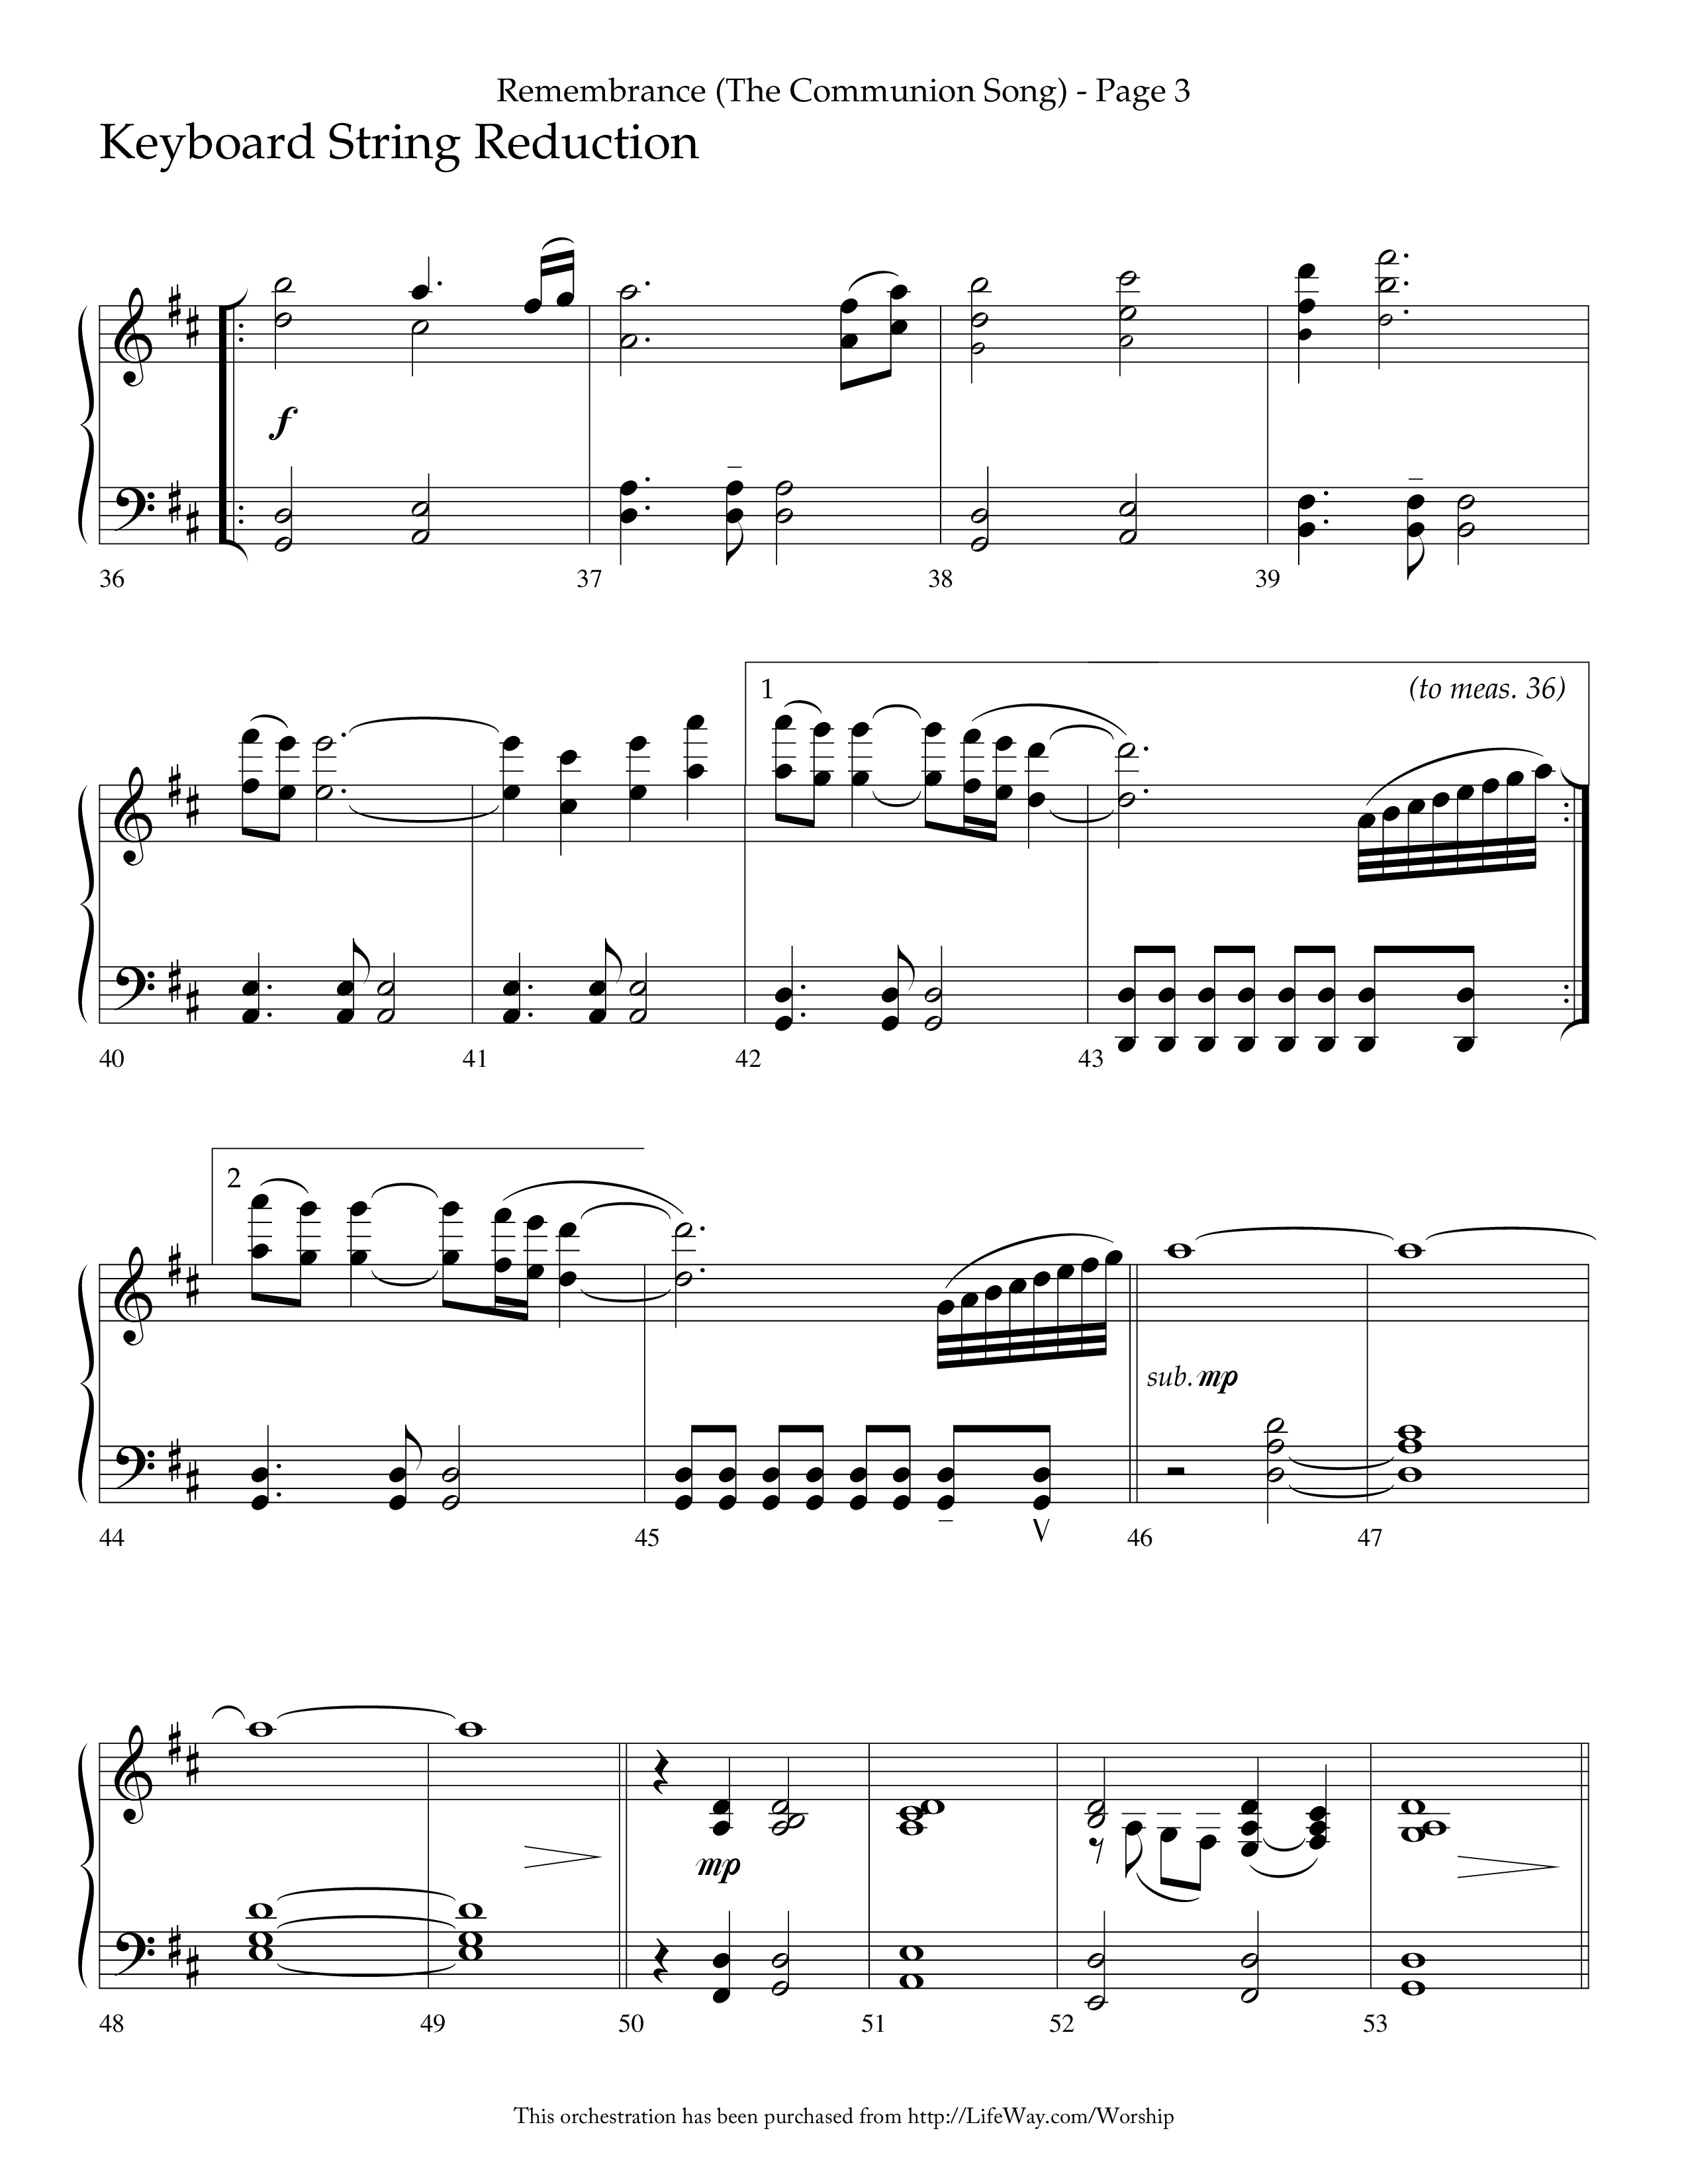 Remembrance (Choral Anthem SATB) String Reduction (Lifeway Choral / Arr. Charlie Sinclair / Arr. Carol Tornquist / Orch. Danny Zaloudik)